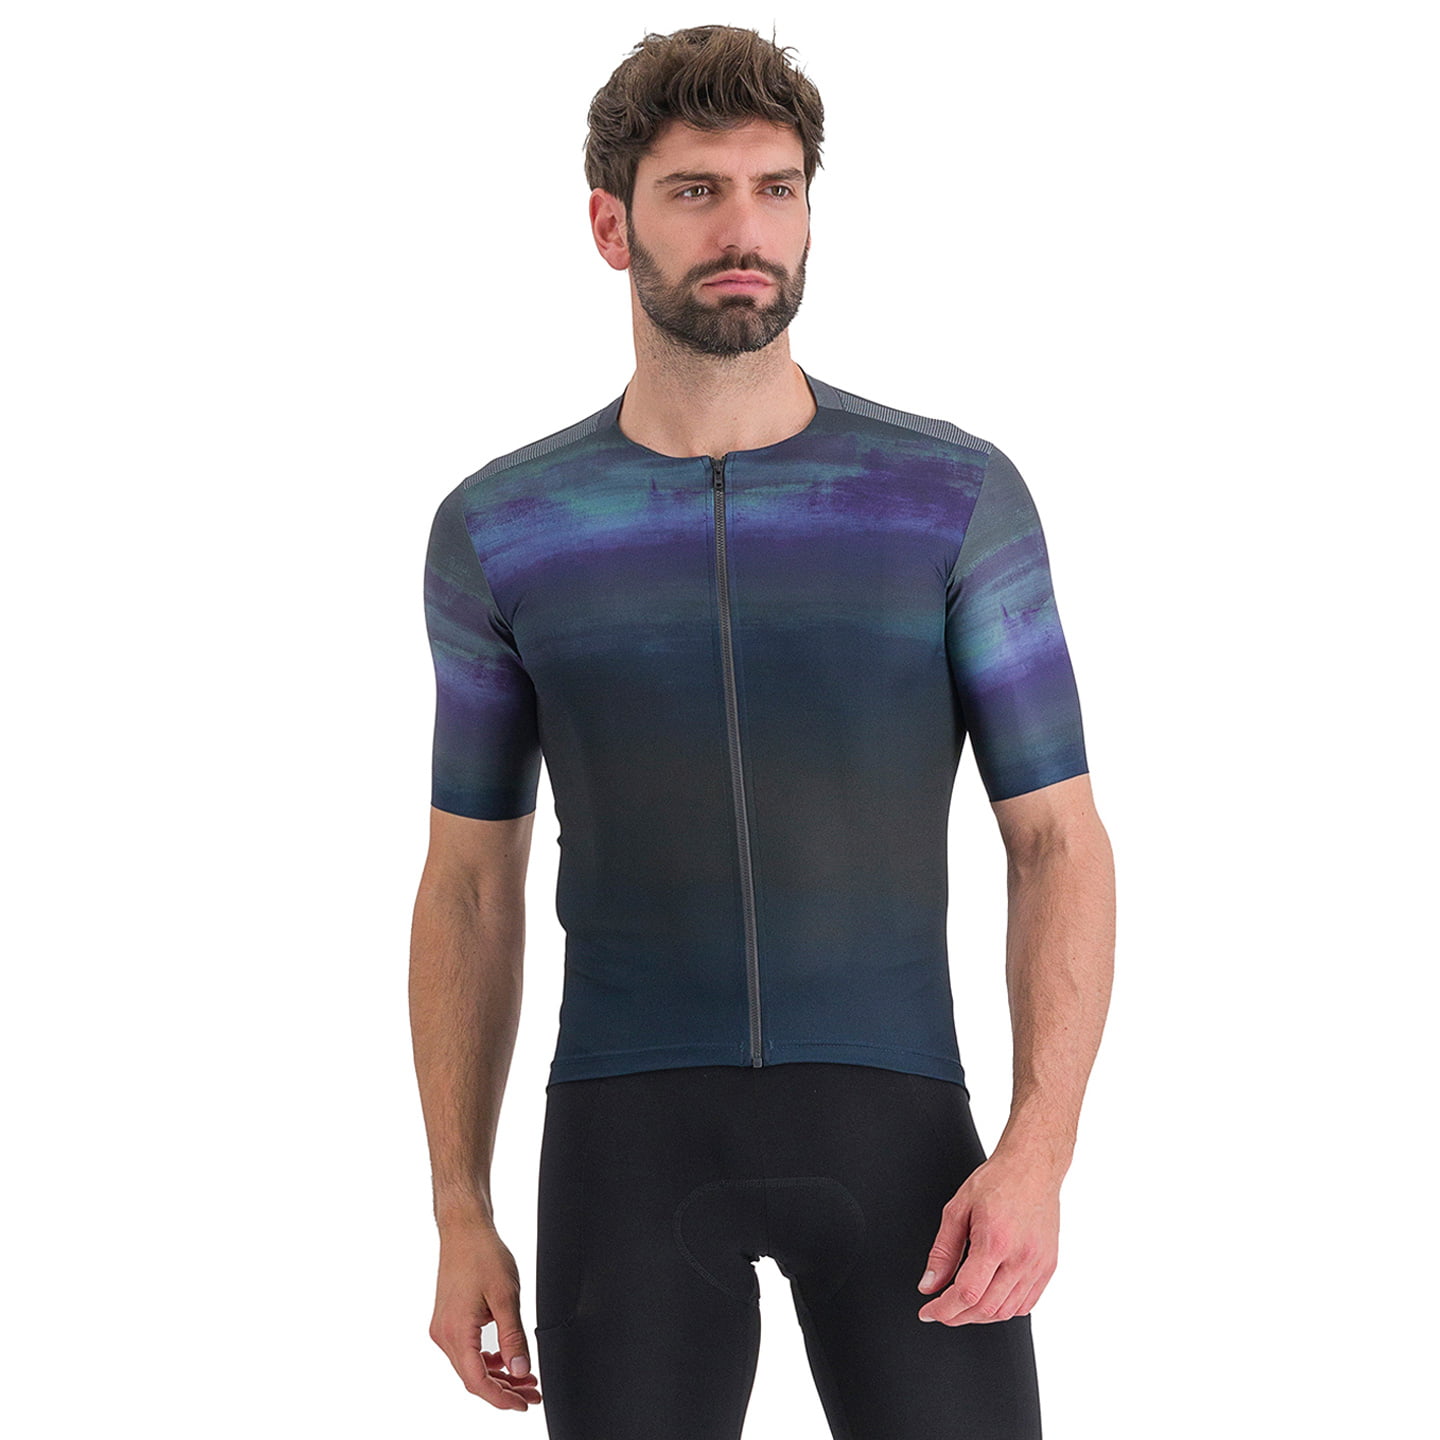 SPORTFUL Flow Supergiara Short Sleeve Jersey Short Sleeve Jersey, for men, size L, Cycling jersey, Cycling clothing